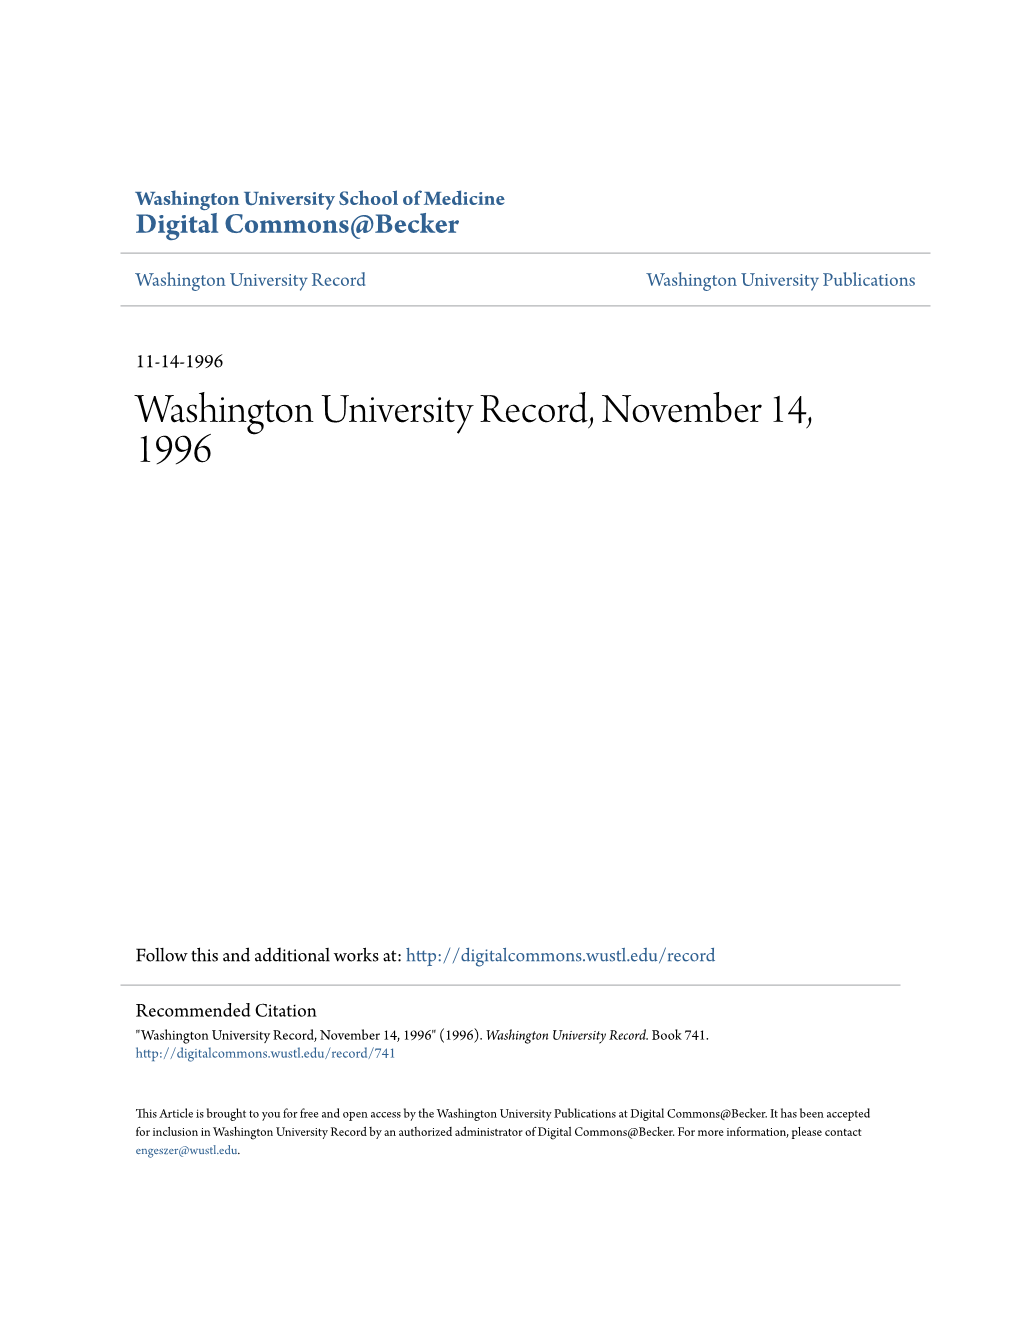 Washington University Record, November 14, 1996